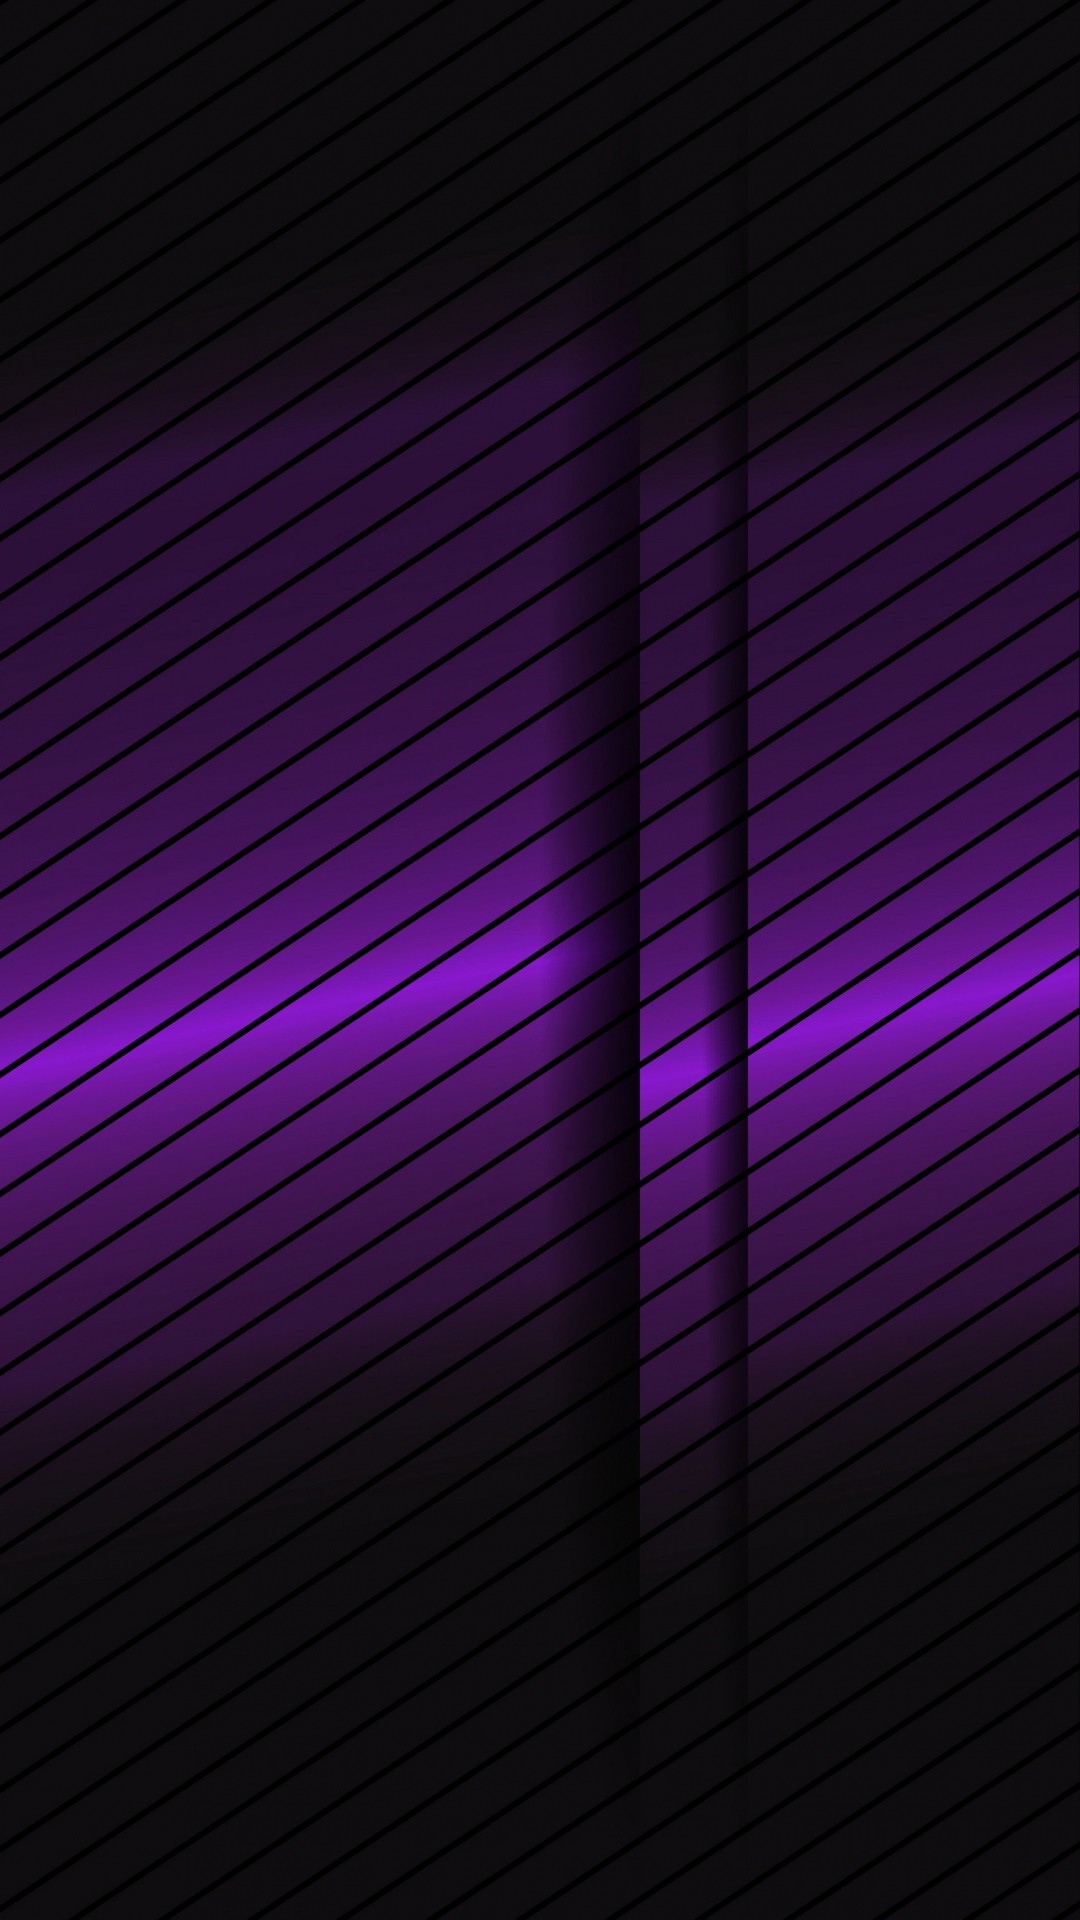 1080x1920 purple.quenalbertini: Abstraction Line Purple iPhone 6 Wallpaper